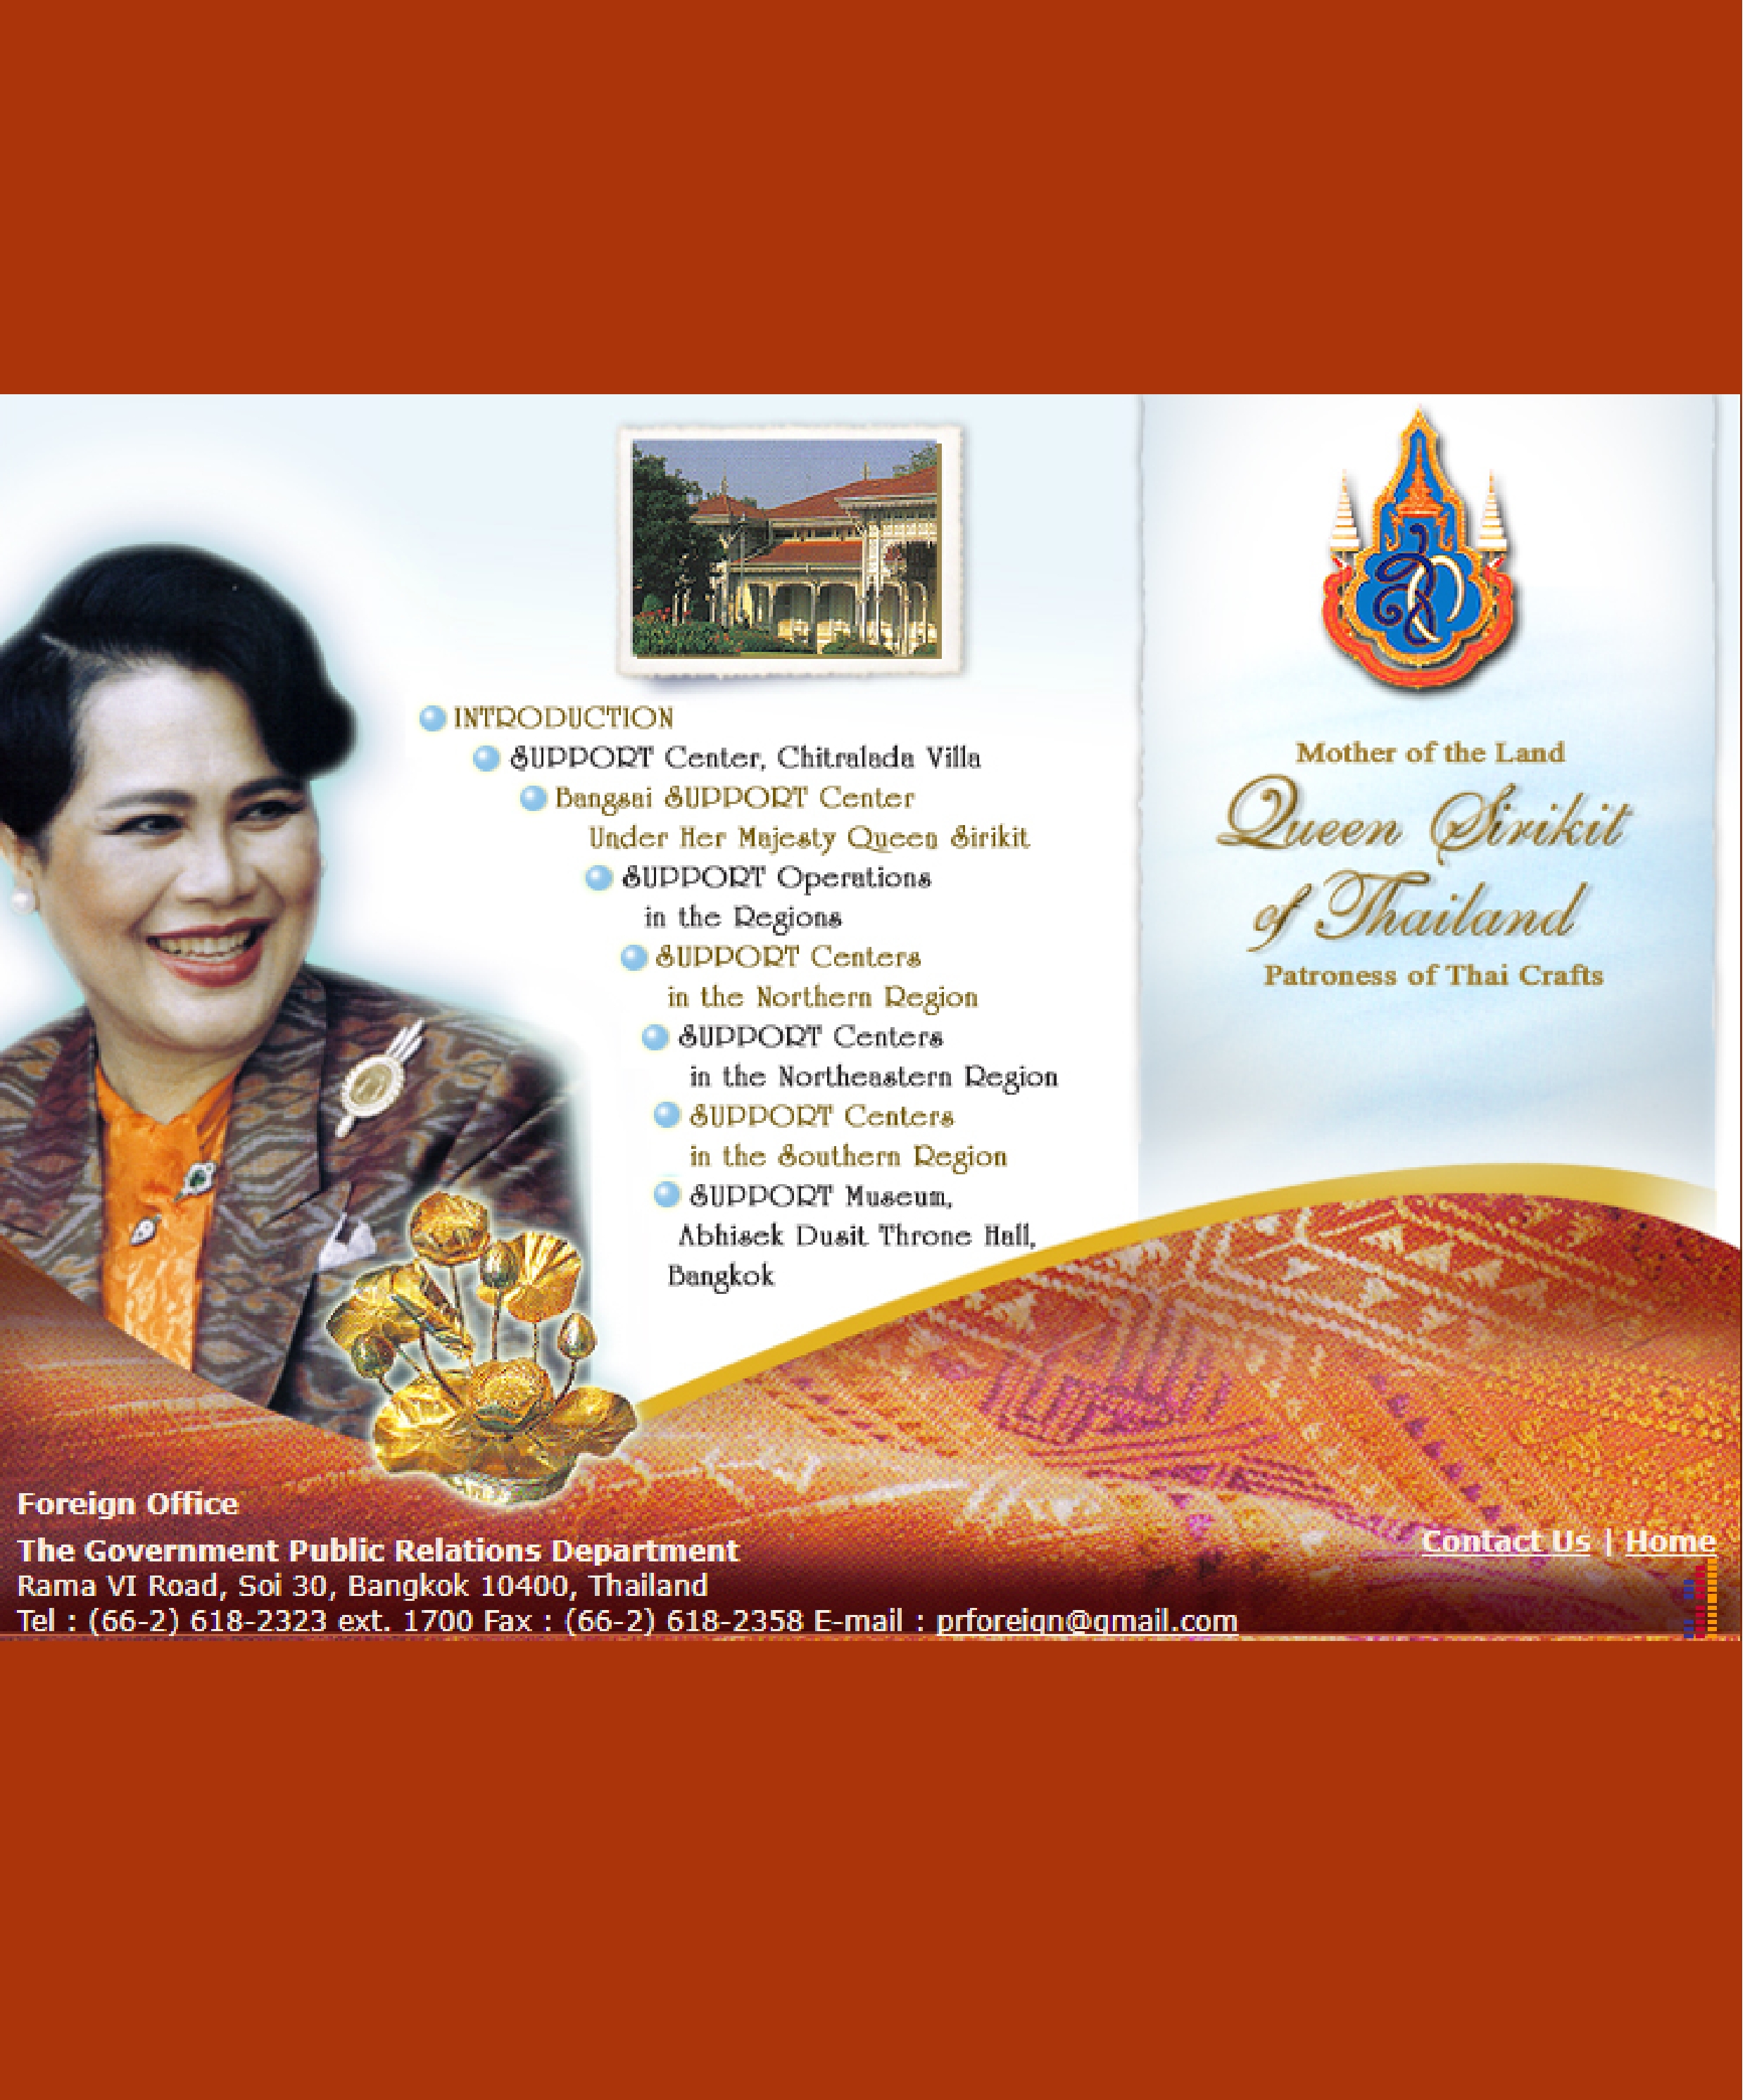 Queen Sirikit of Thailand Patroness of Thai Crafts